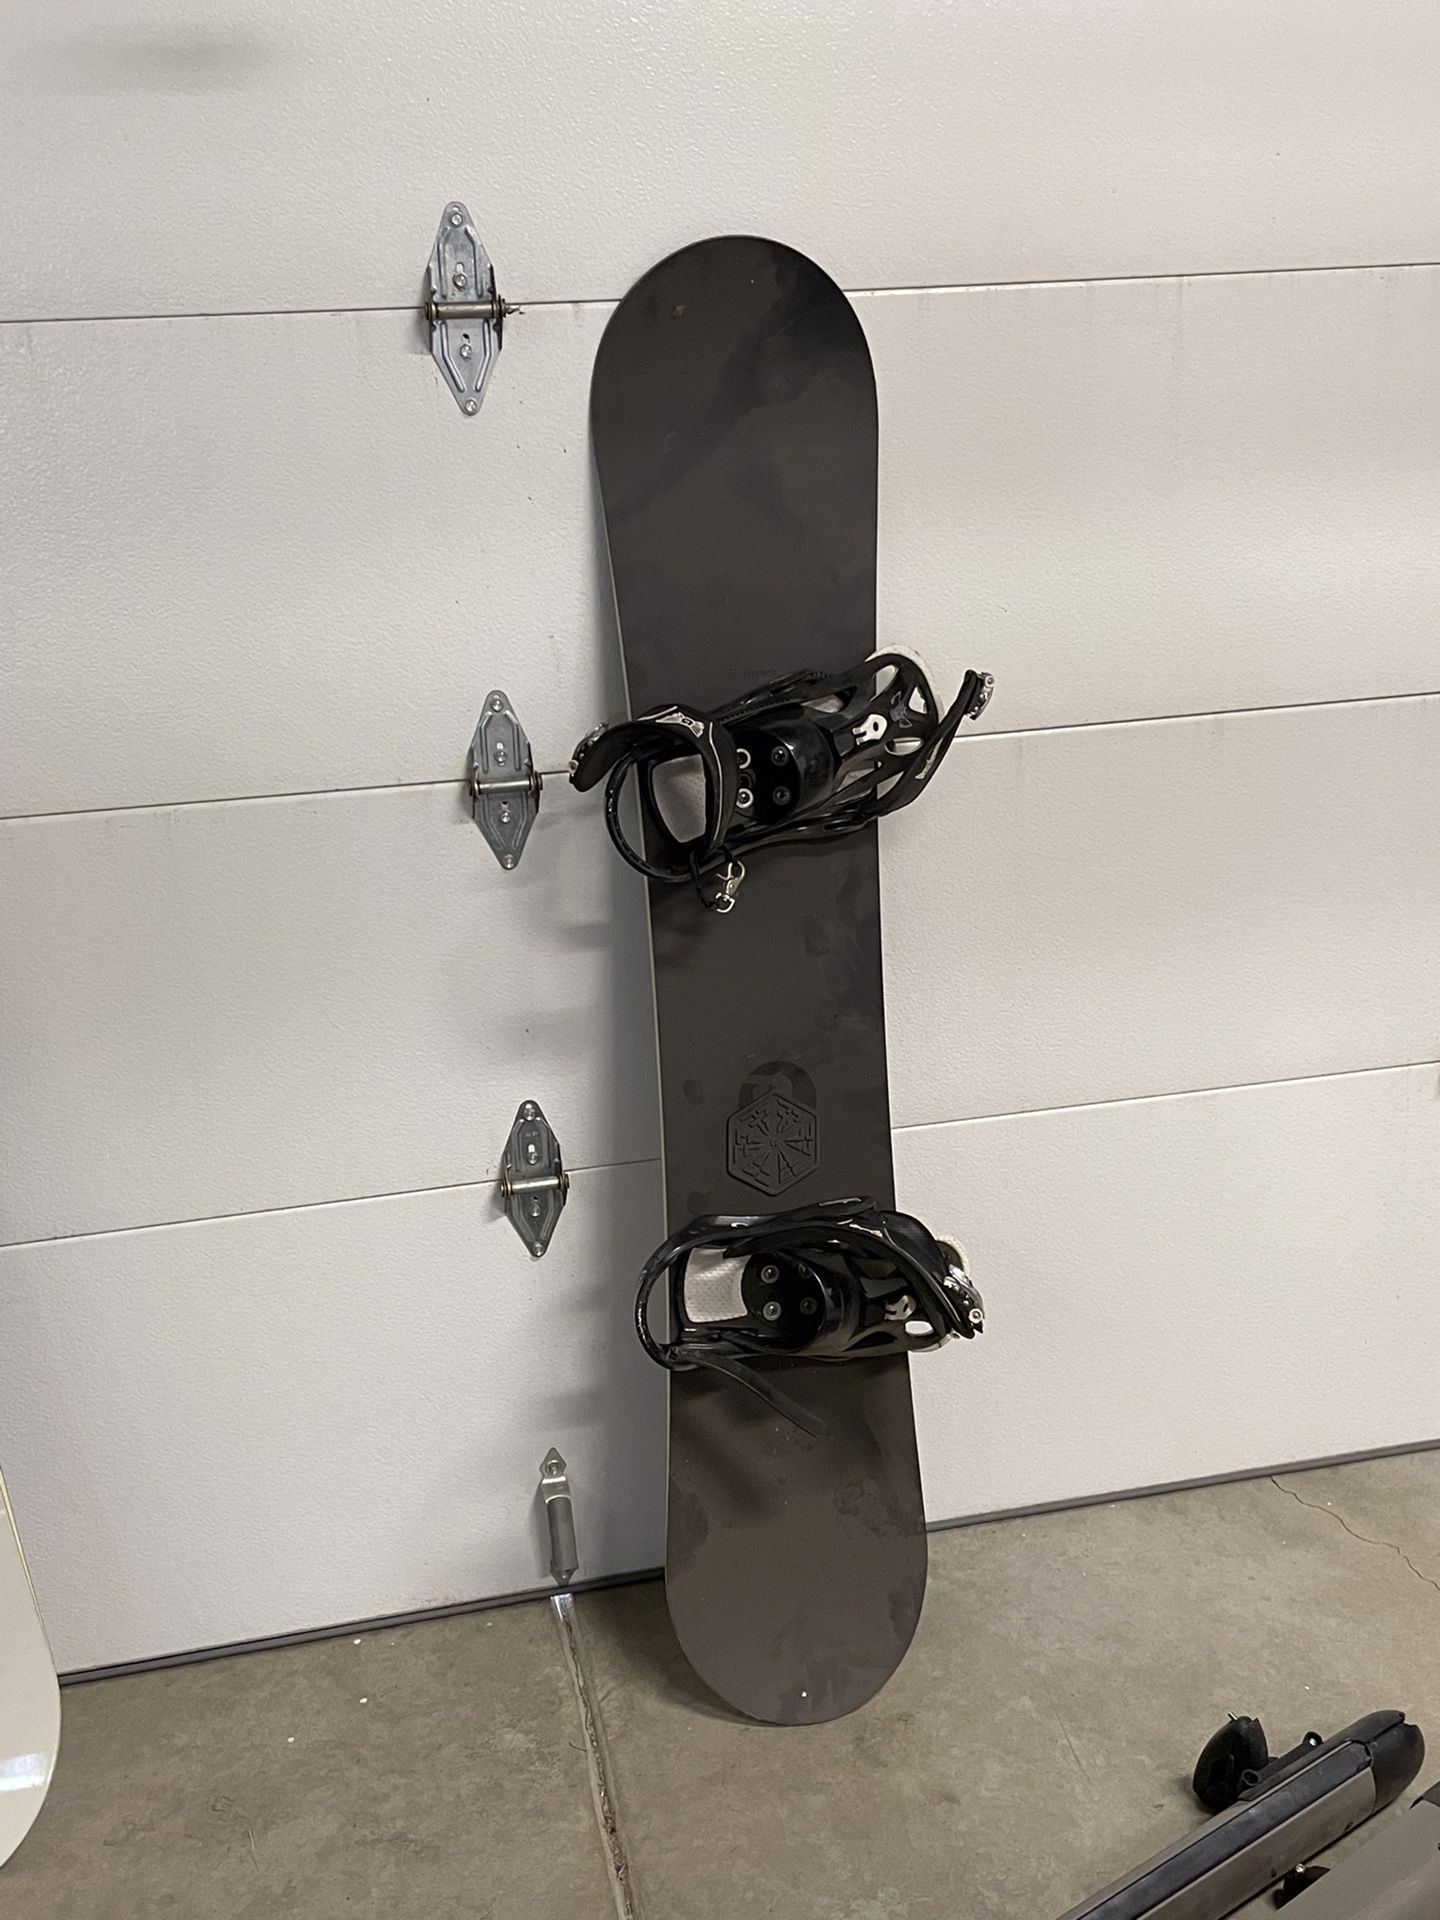 Snowboard With Bindings